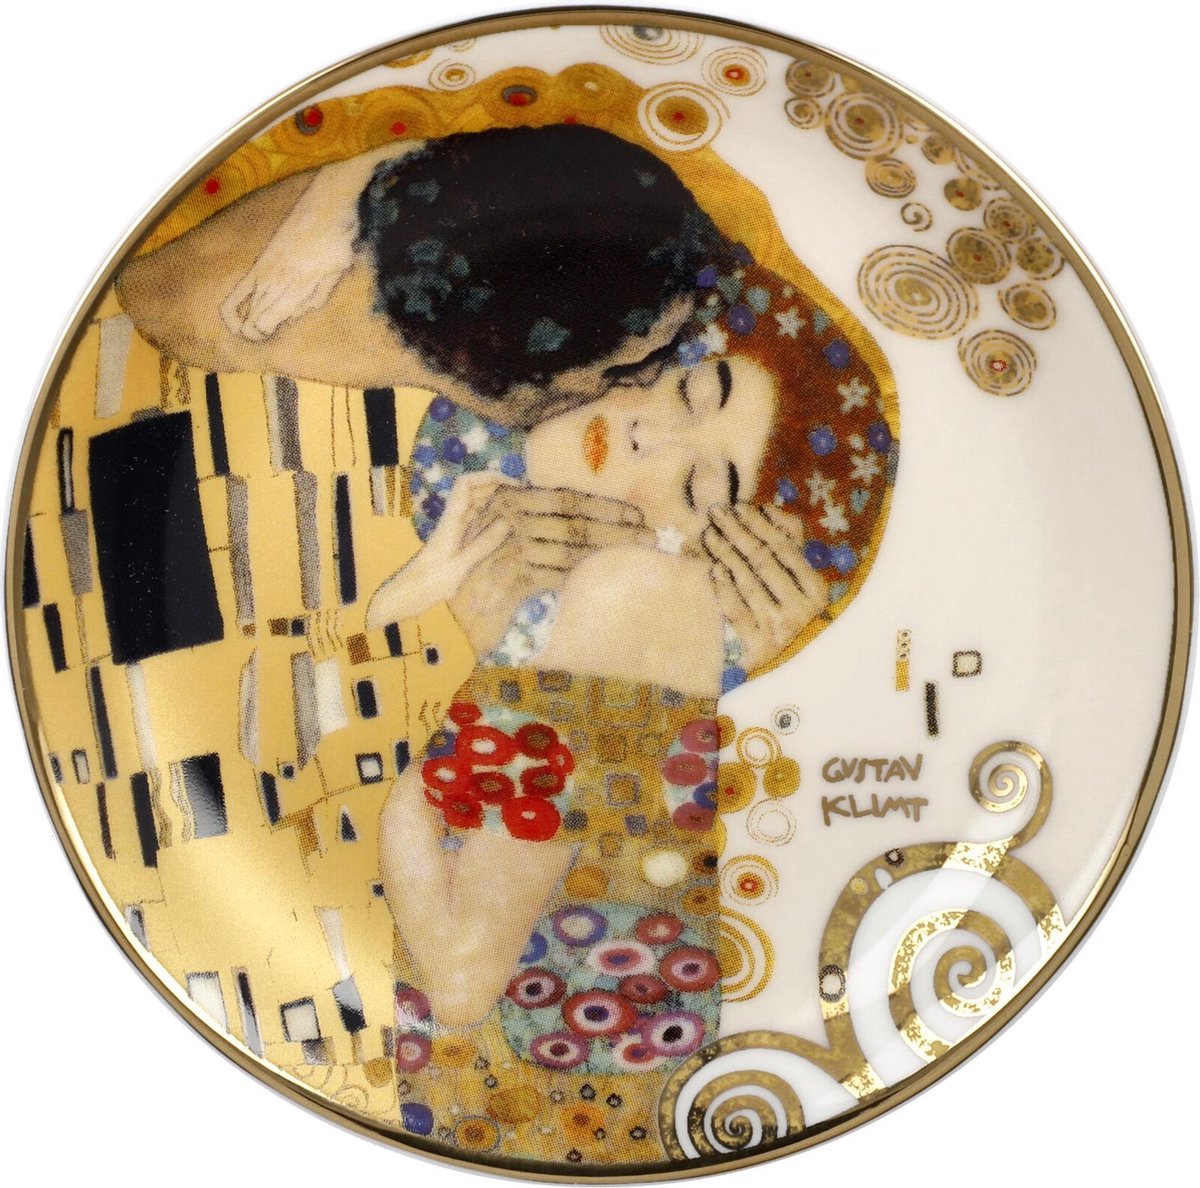 Goebel - Gustav Klimt | Sier Schoteltje De Kus | Porselein - 10cm